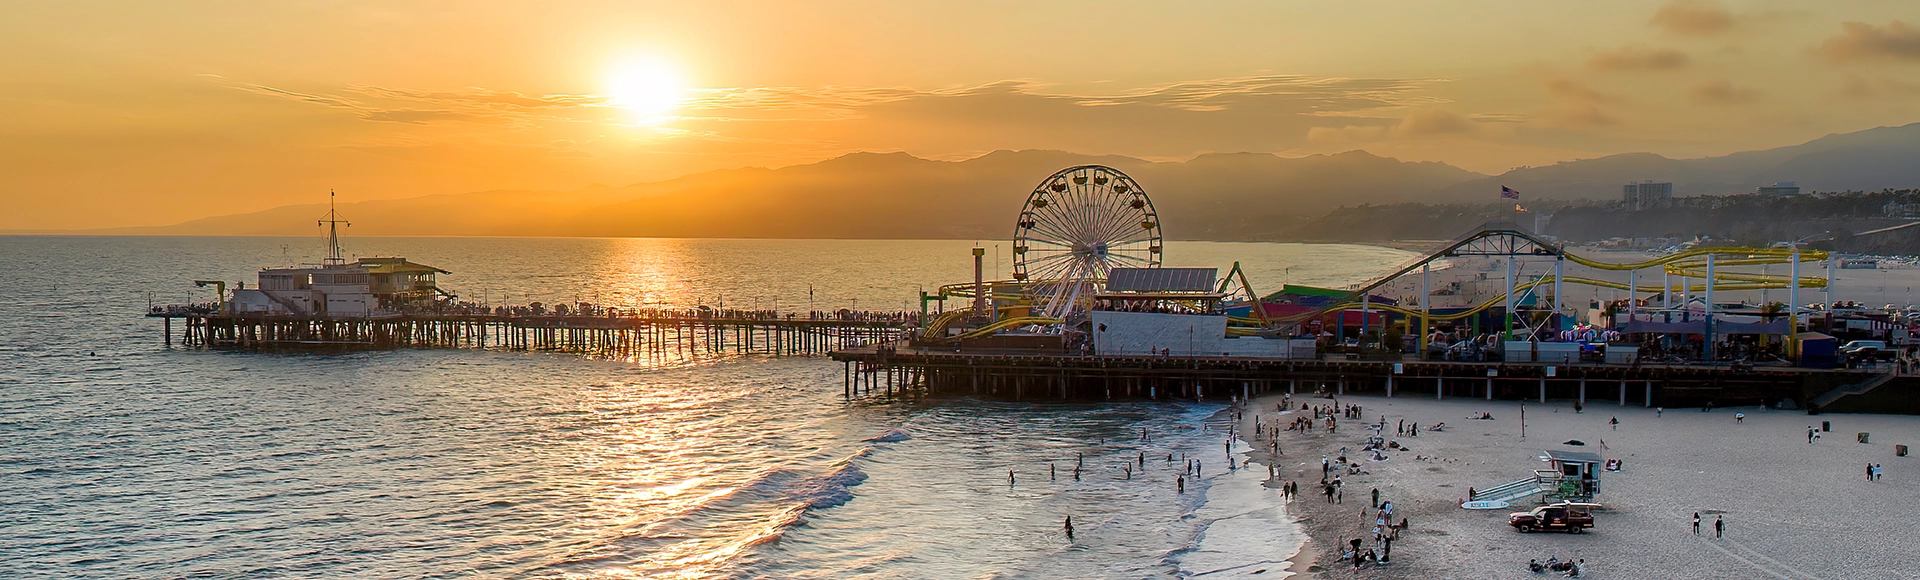 Santa Monica pier California